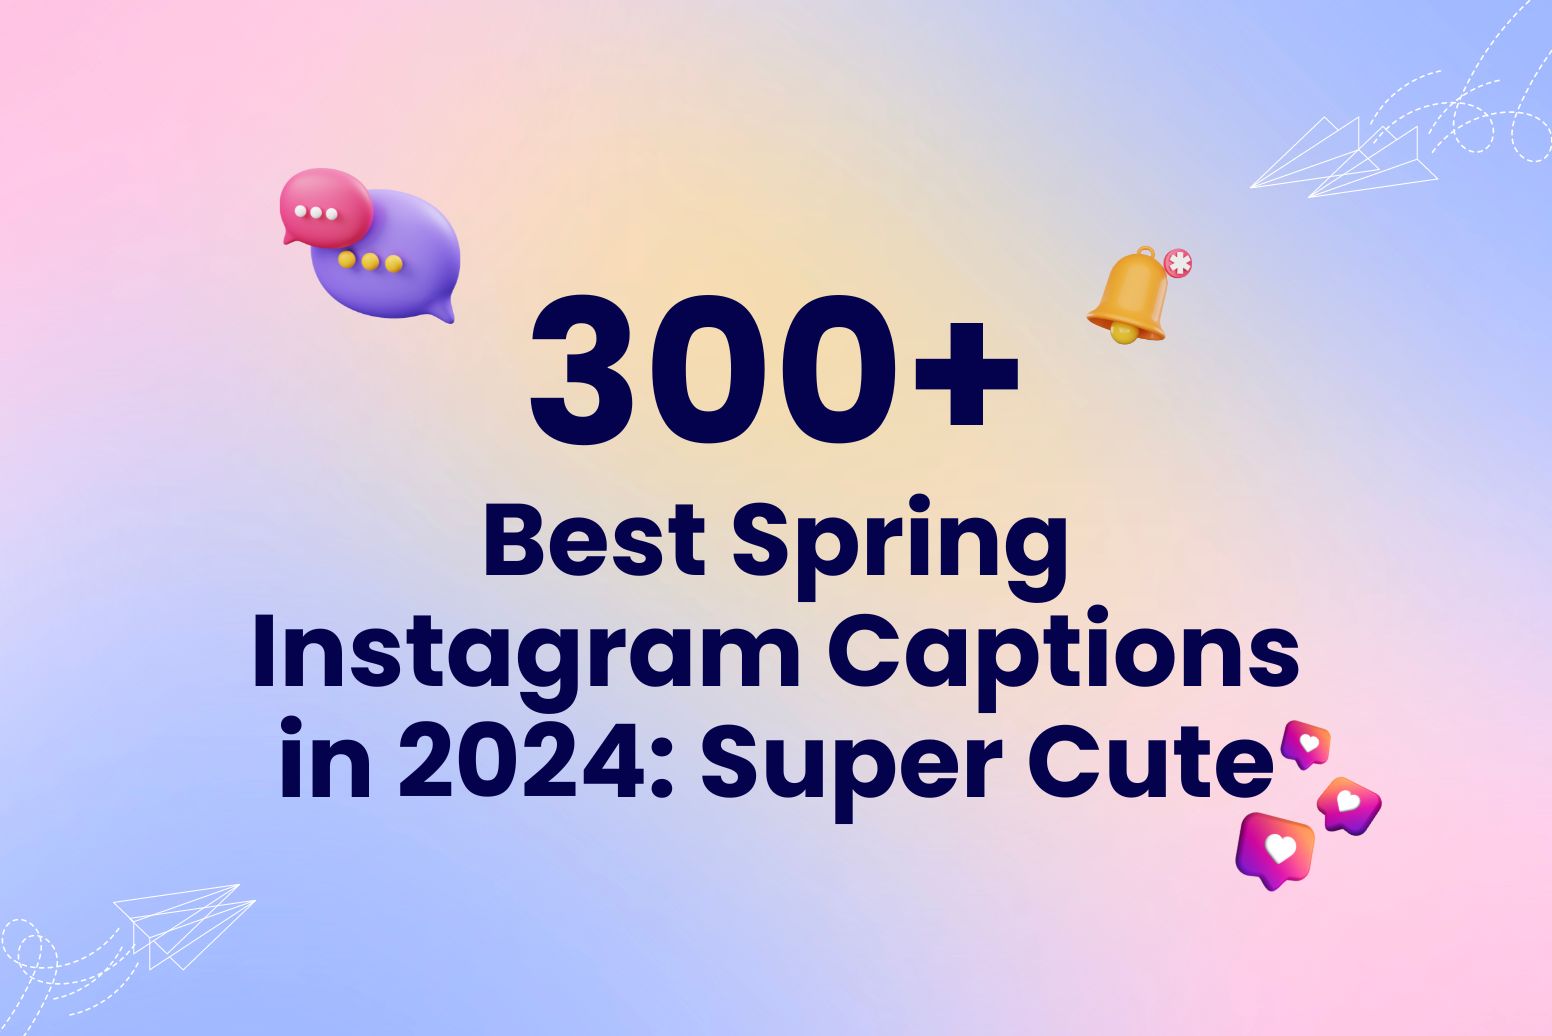 300+ Best Spring Instagram Captions in 2024 Super Cute